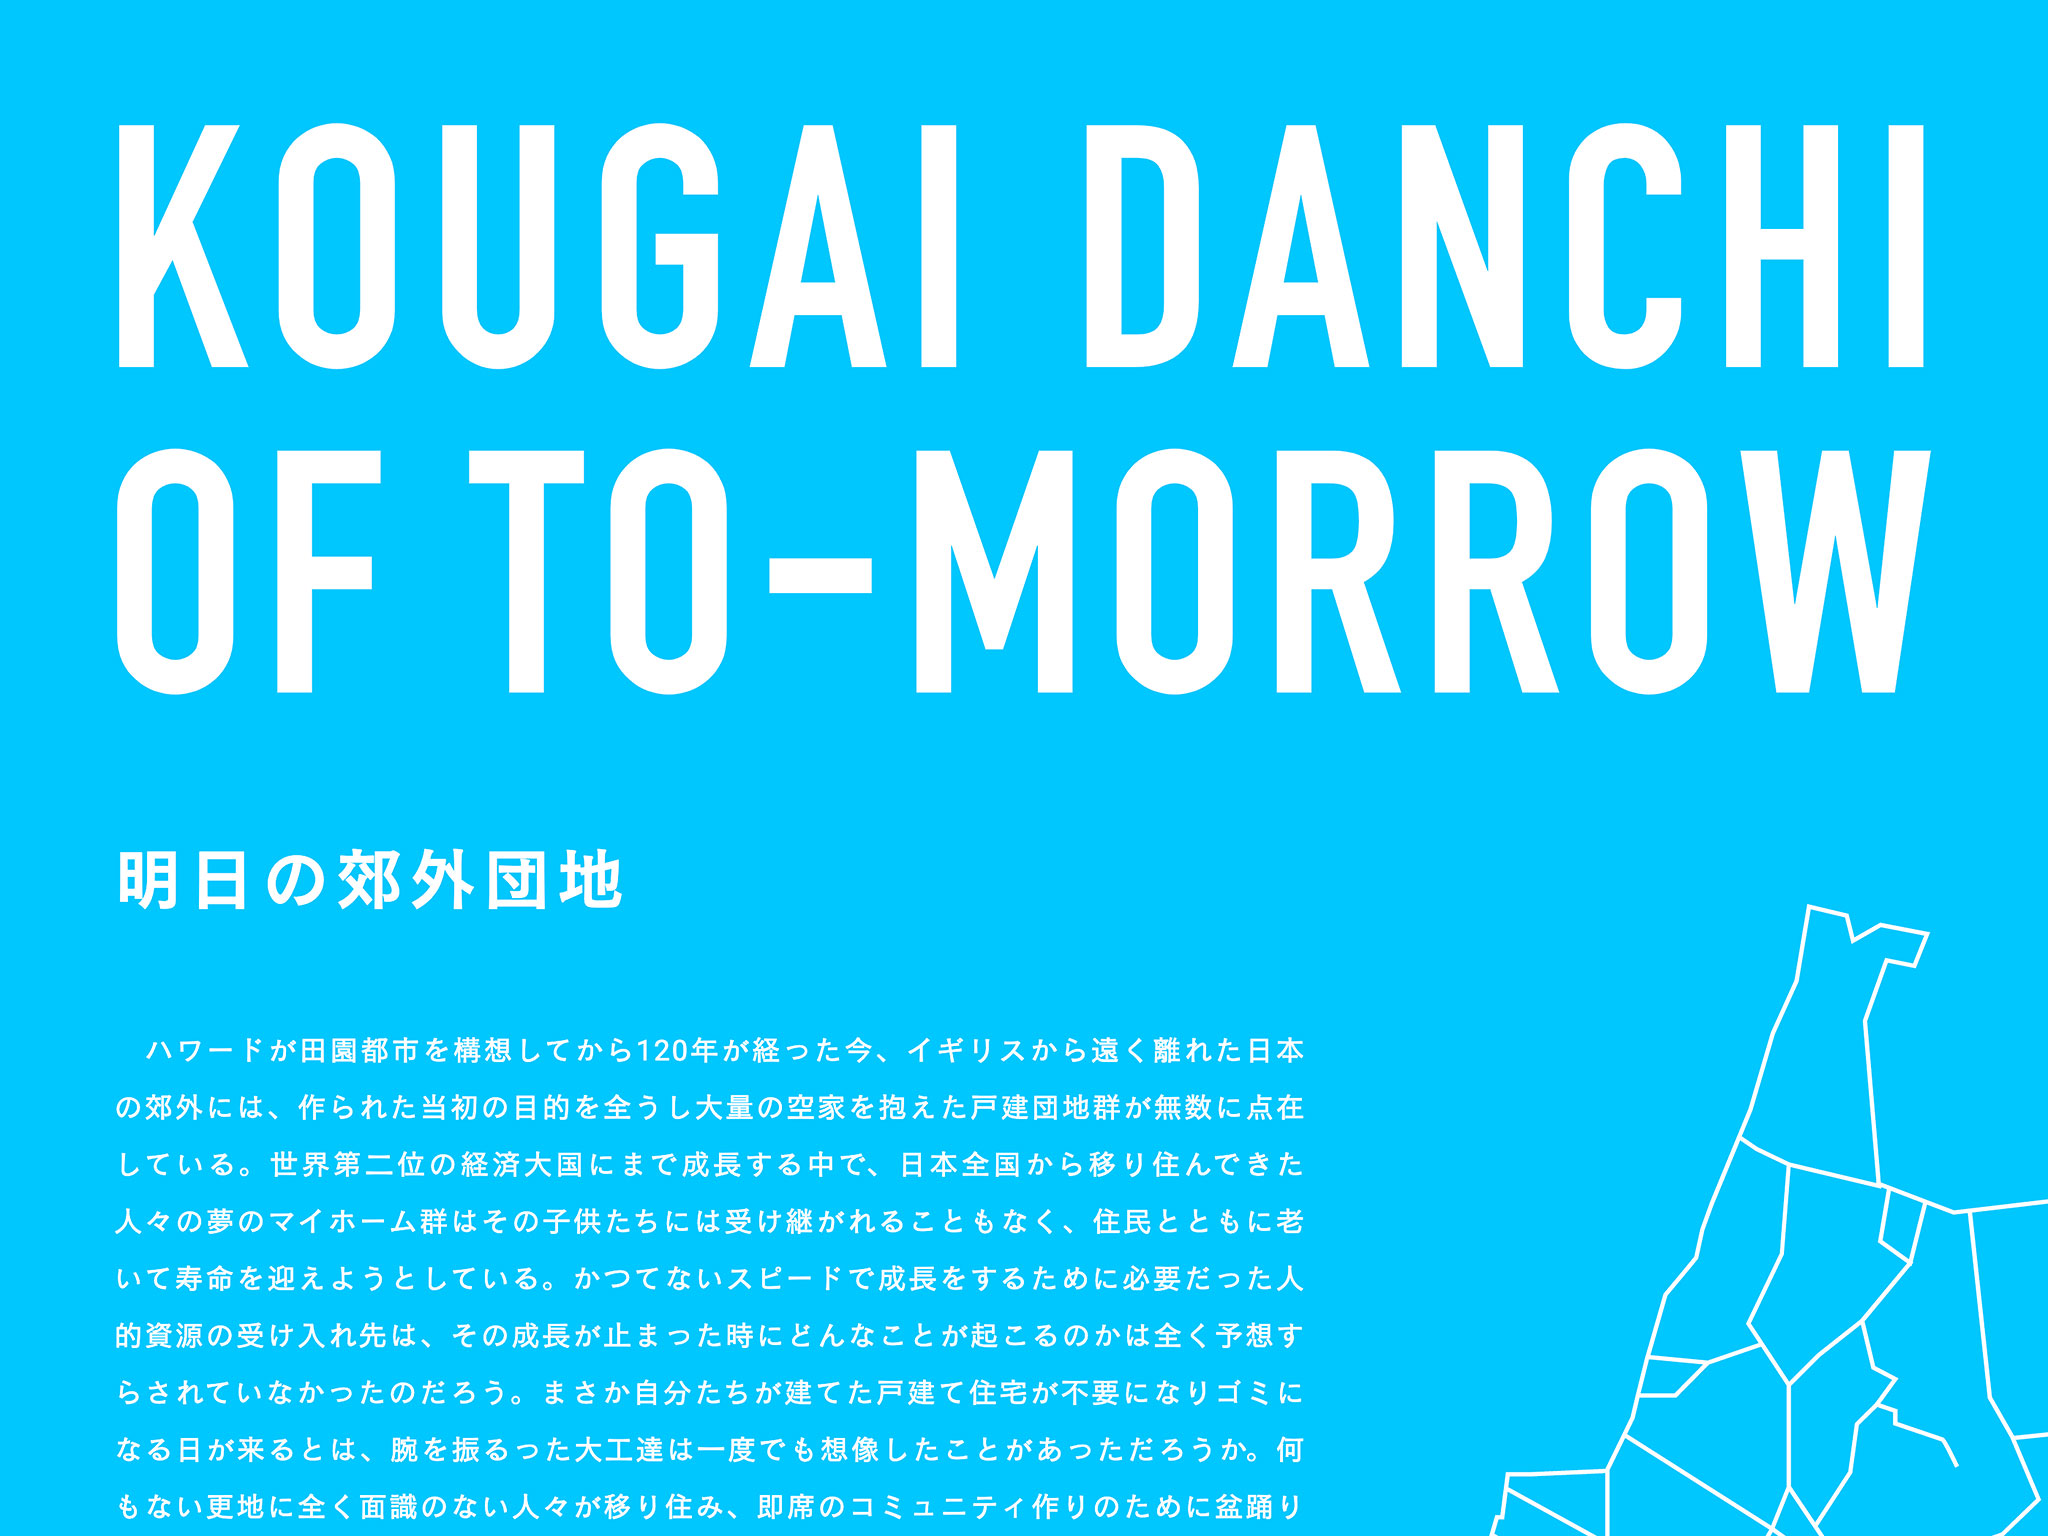 KOUGAI DANCHI OF TOMORROW | 明日の郊外団地